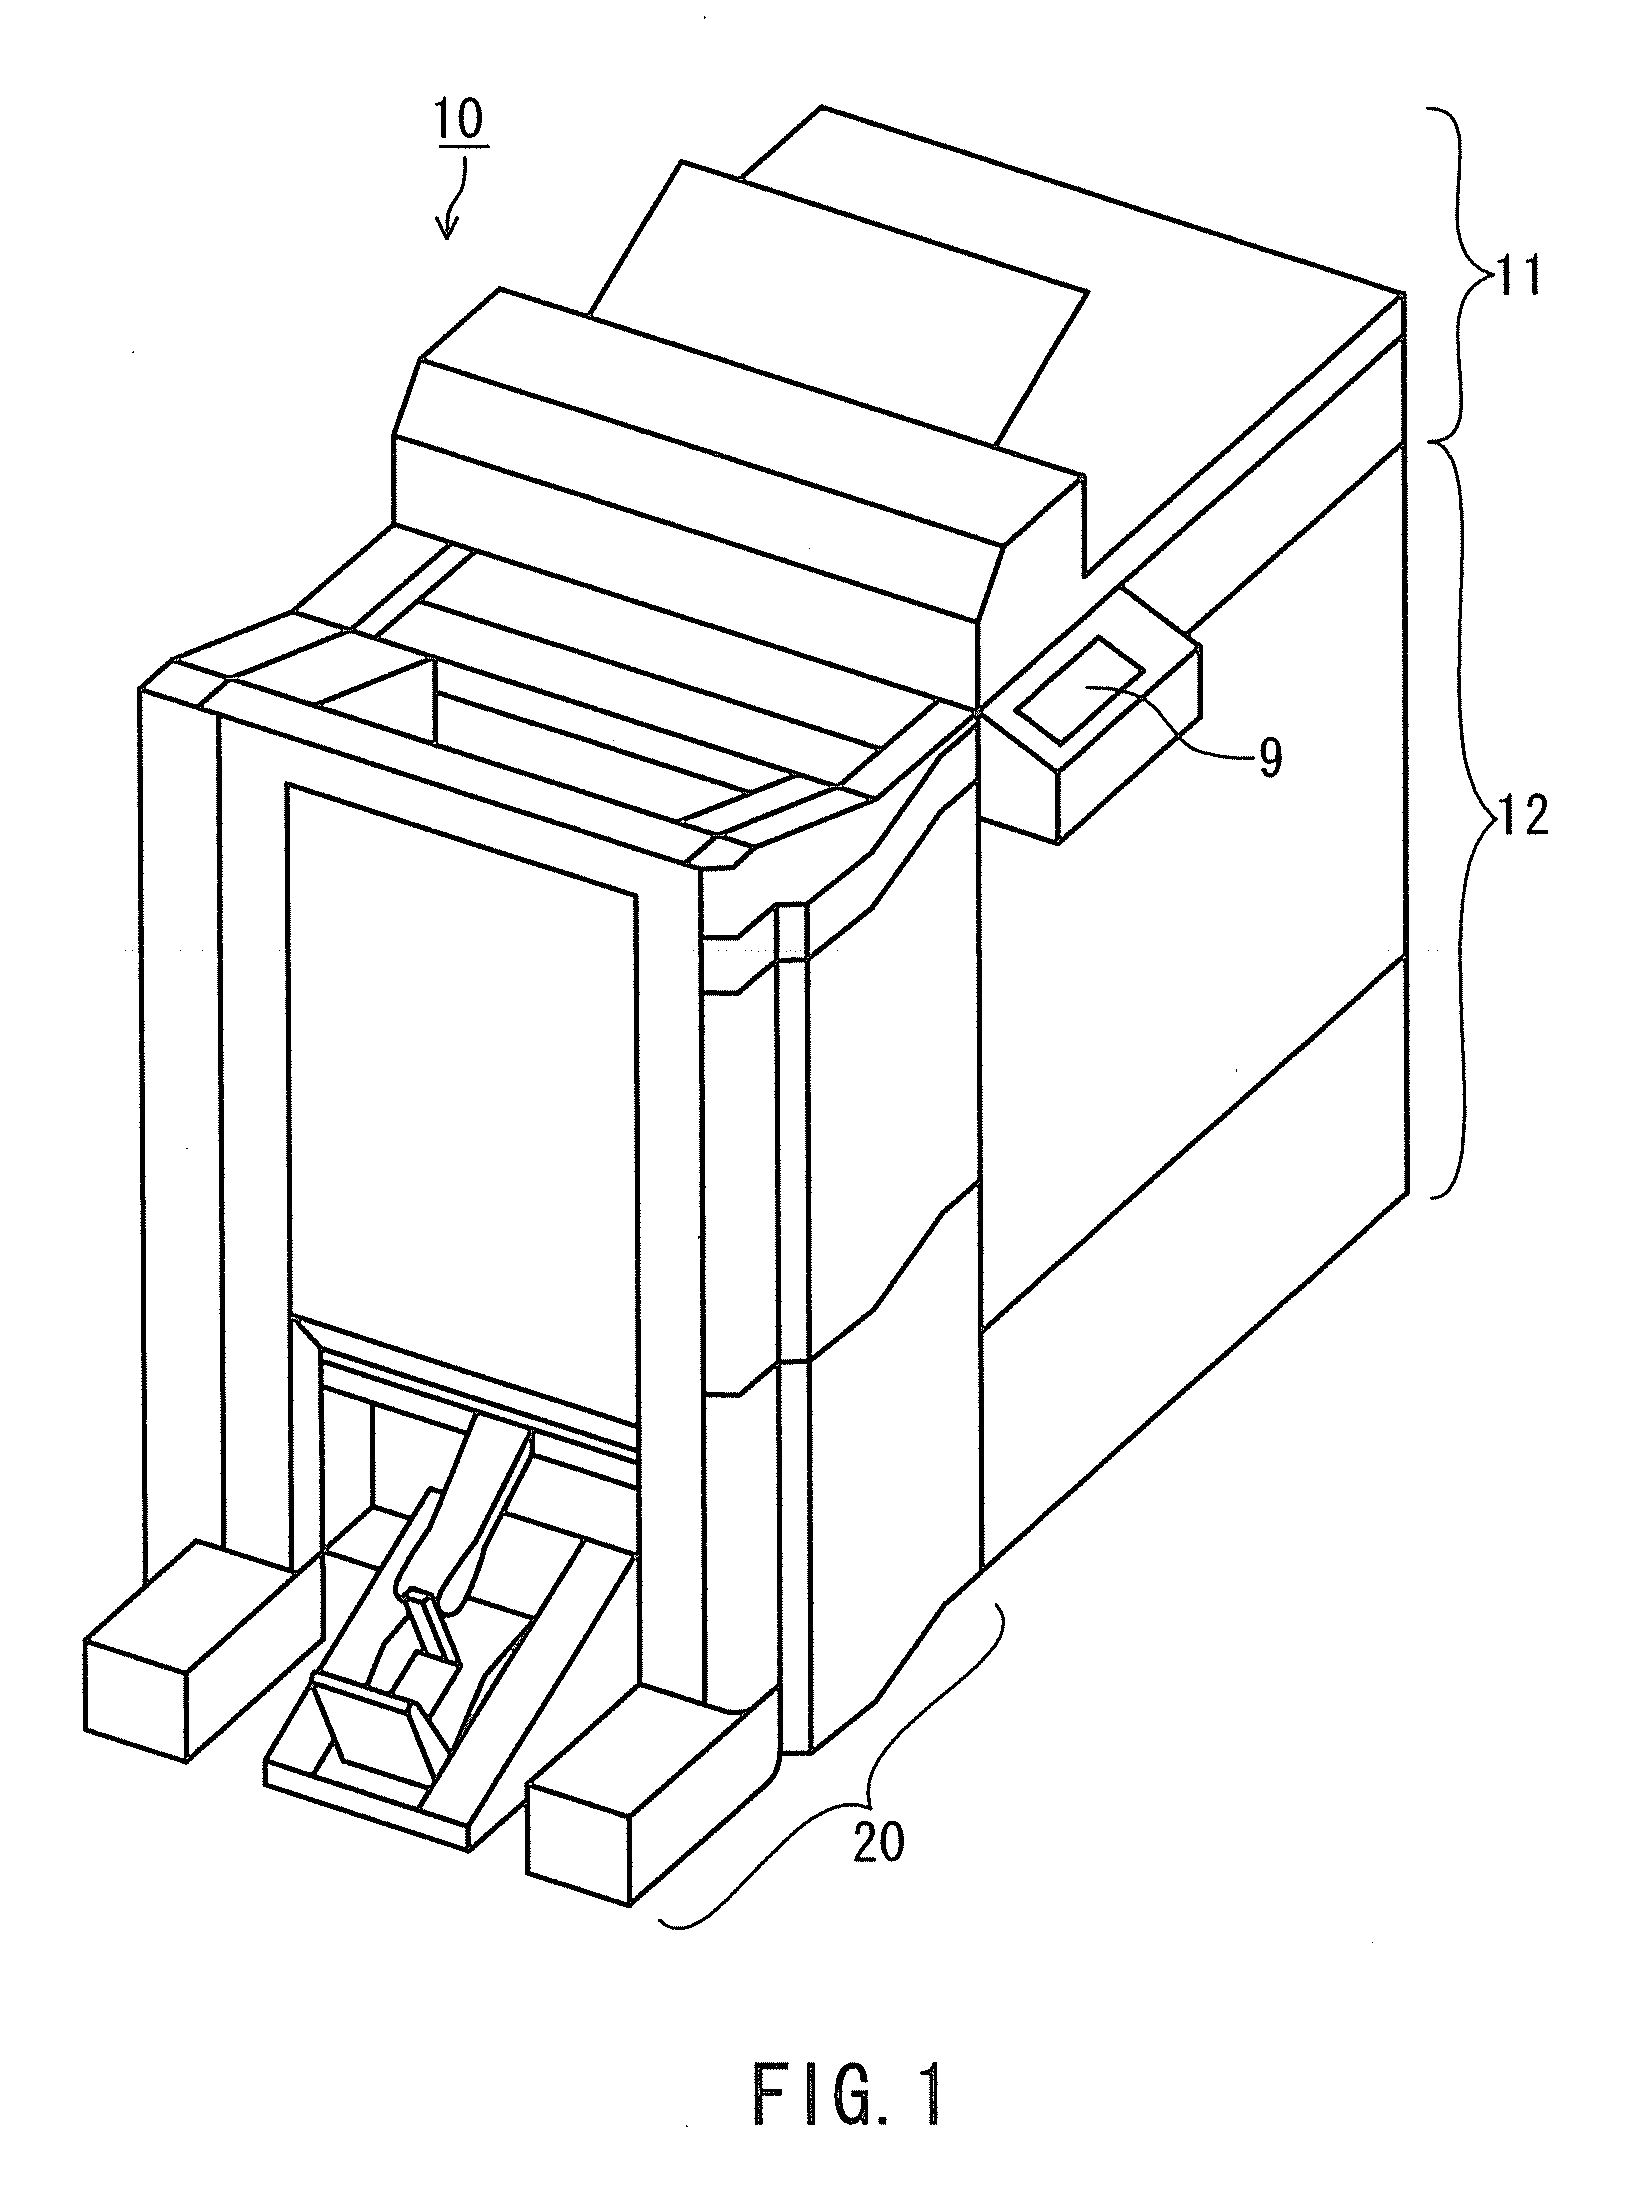 Sheet finisher, image forming apparatus using the same, and sheet finishing method